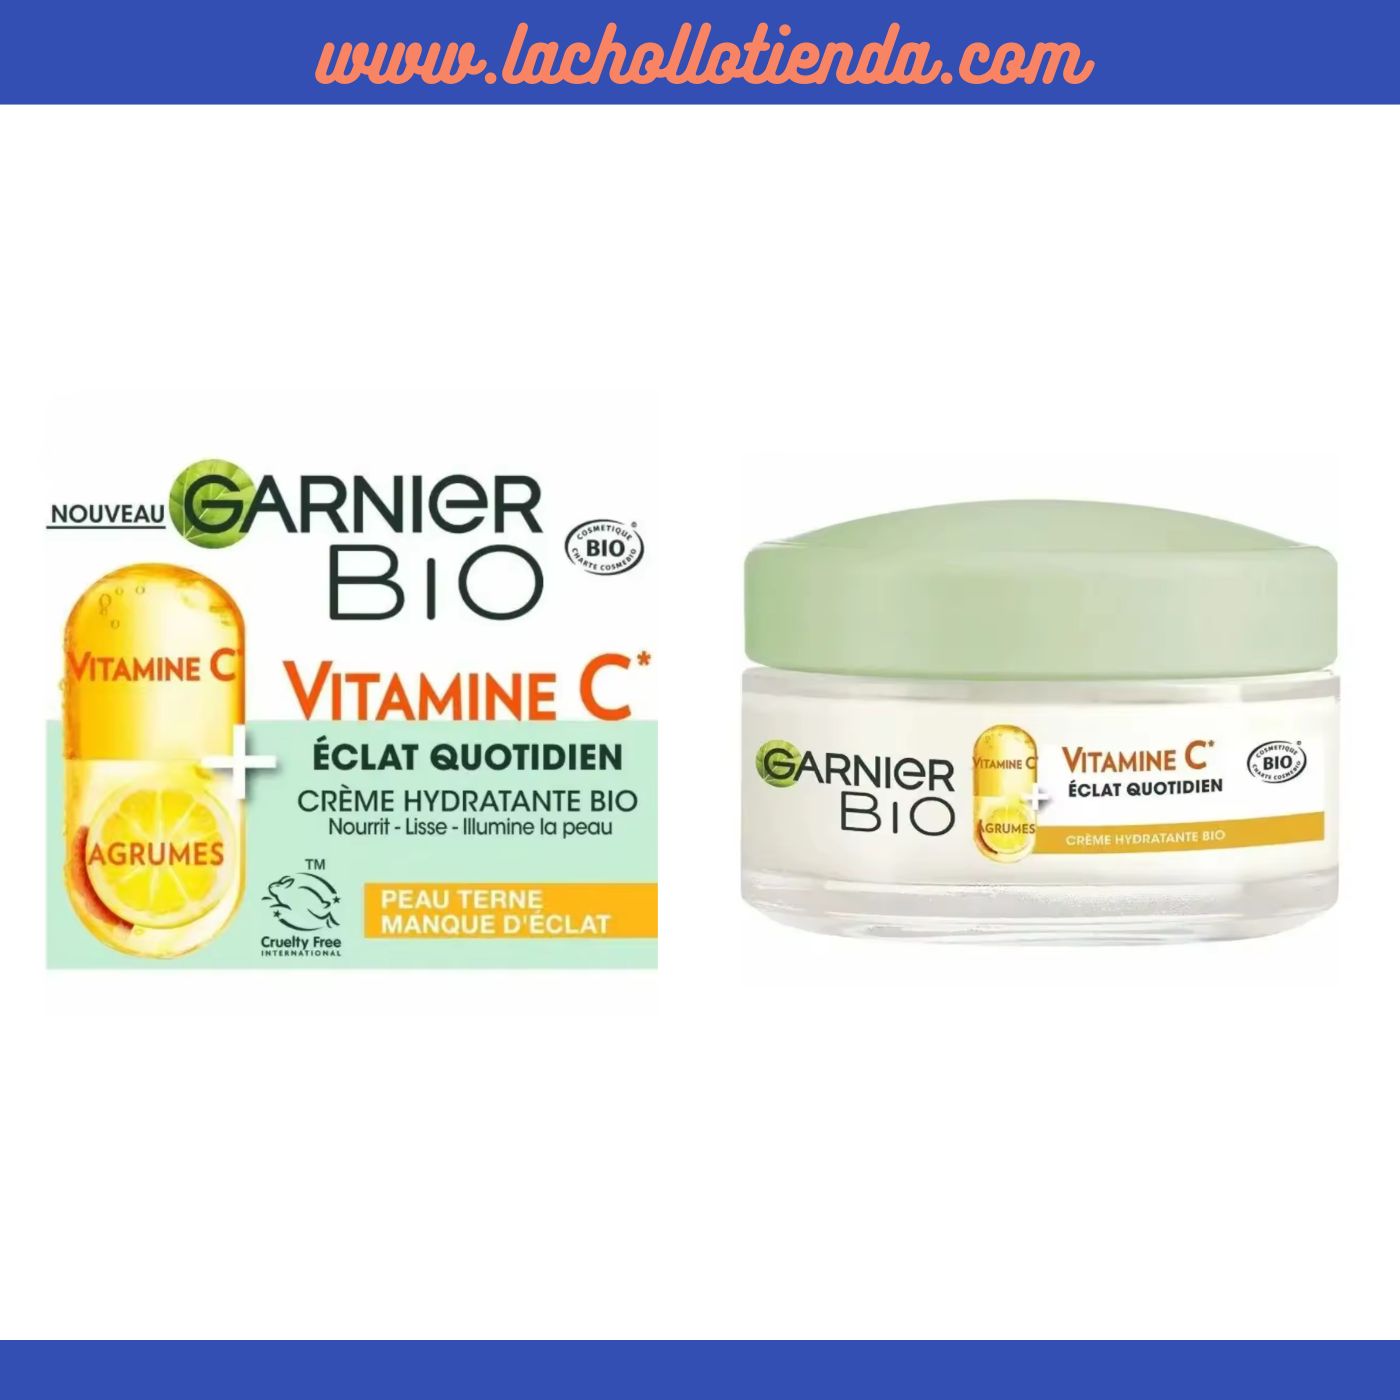 Garnier Bio Vitamina C Crema Hidratante 50ml. (Embalaje deteriorado)